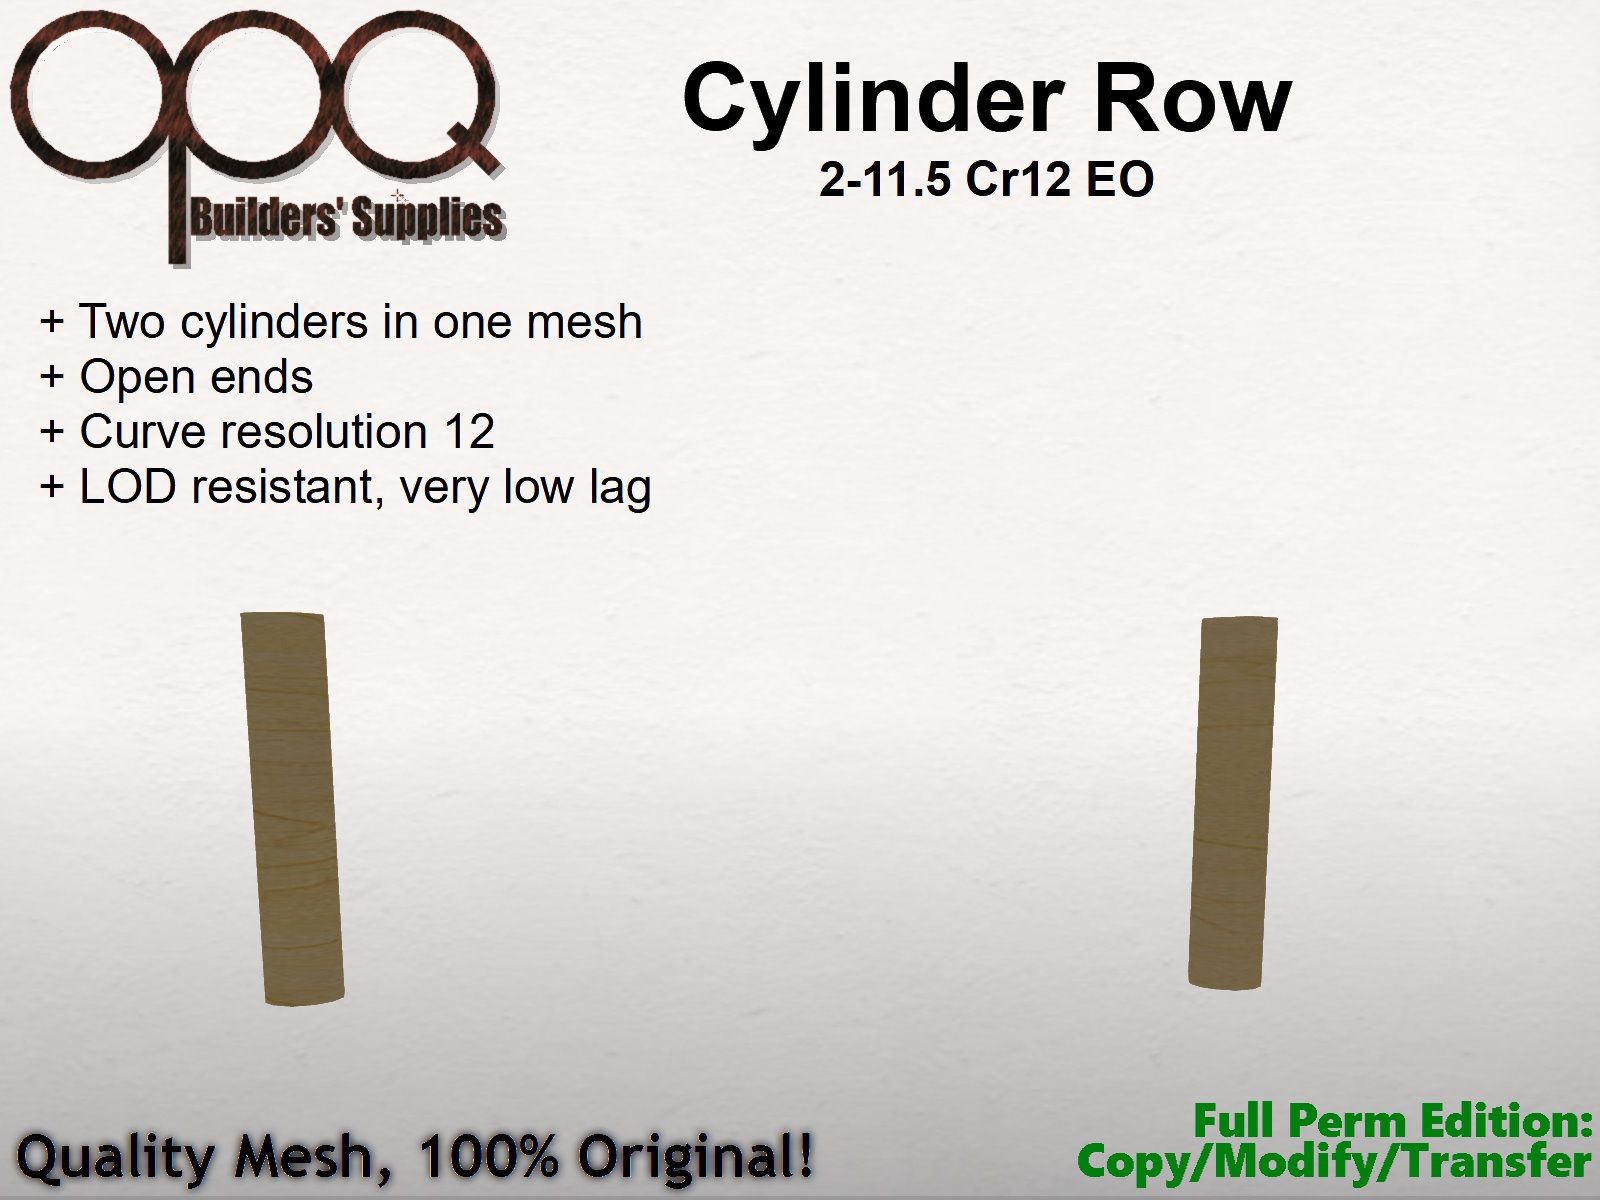 OPQ Cylinder Row 2-11.5 Cr12 EO Poster.jpg